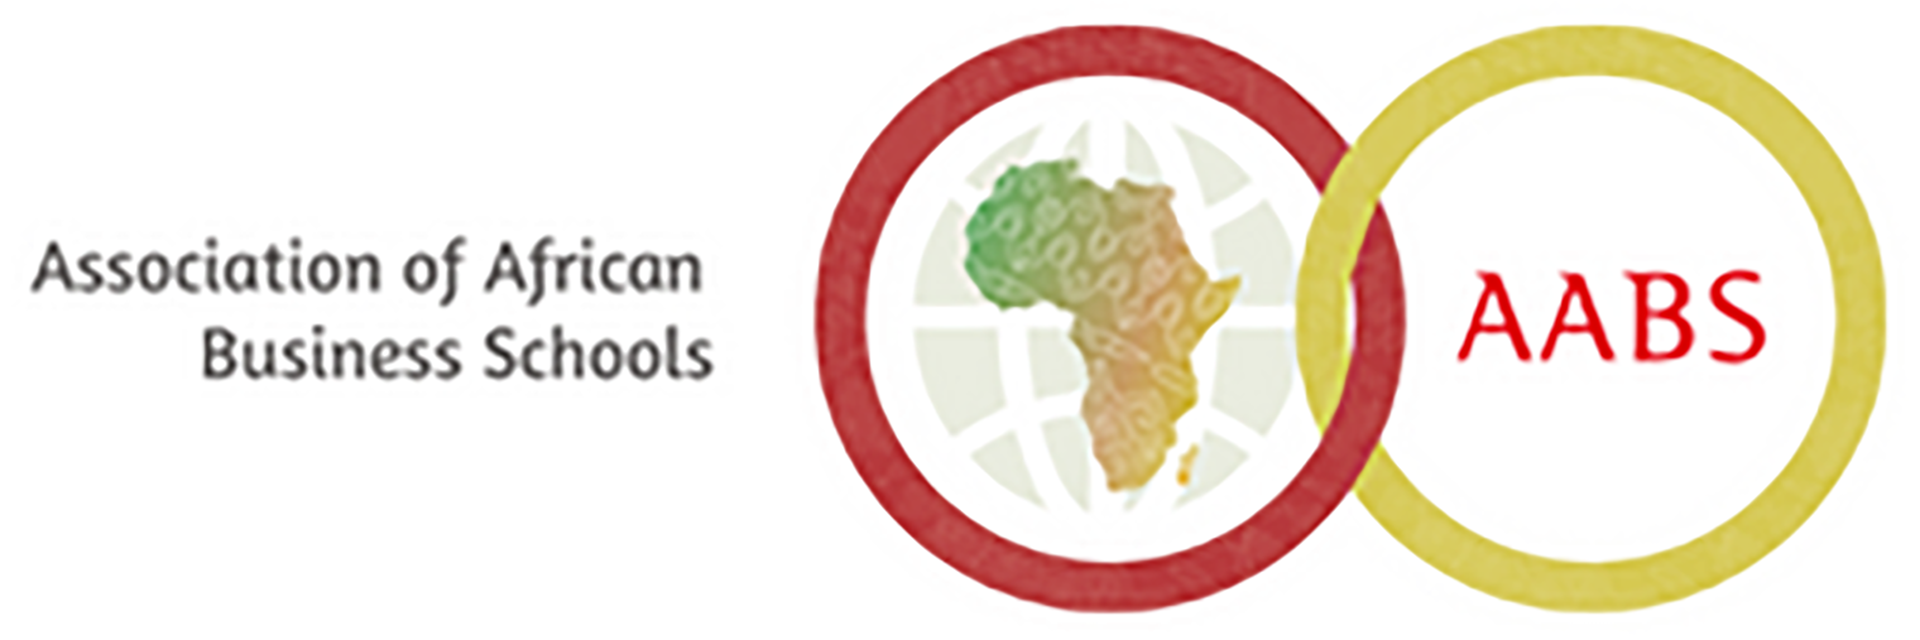 Association Of African Business Schools Aabs